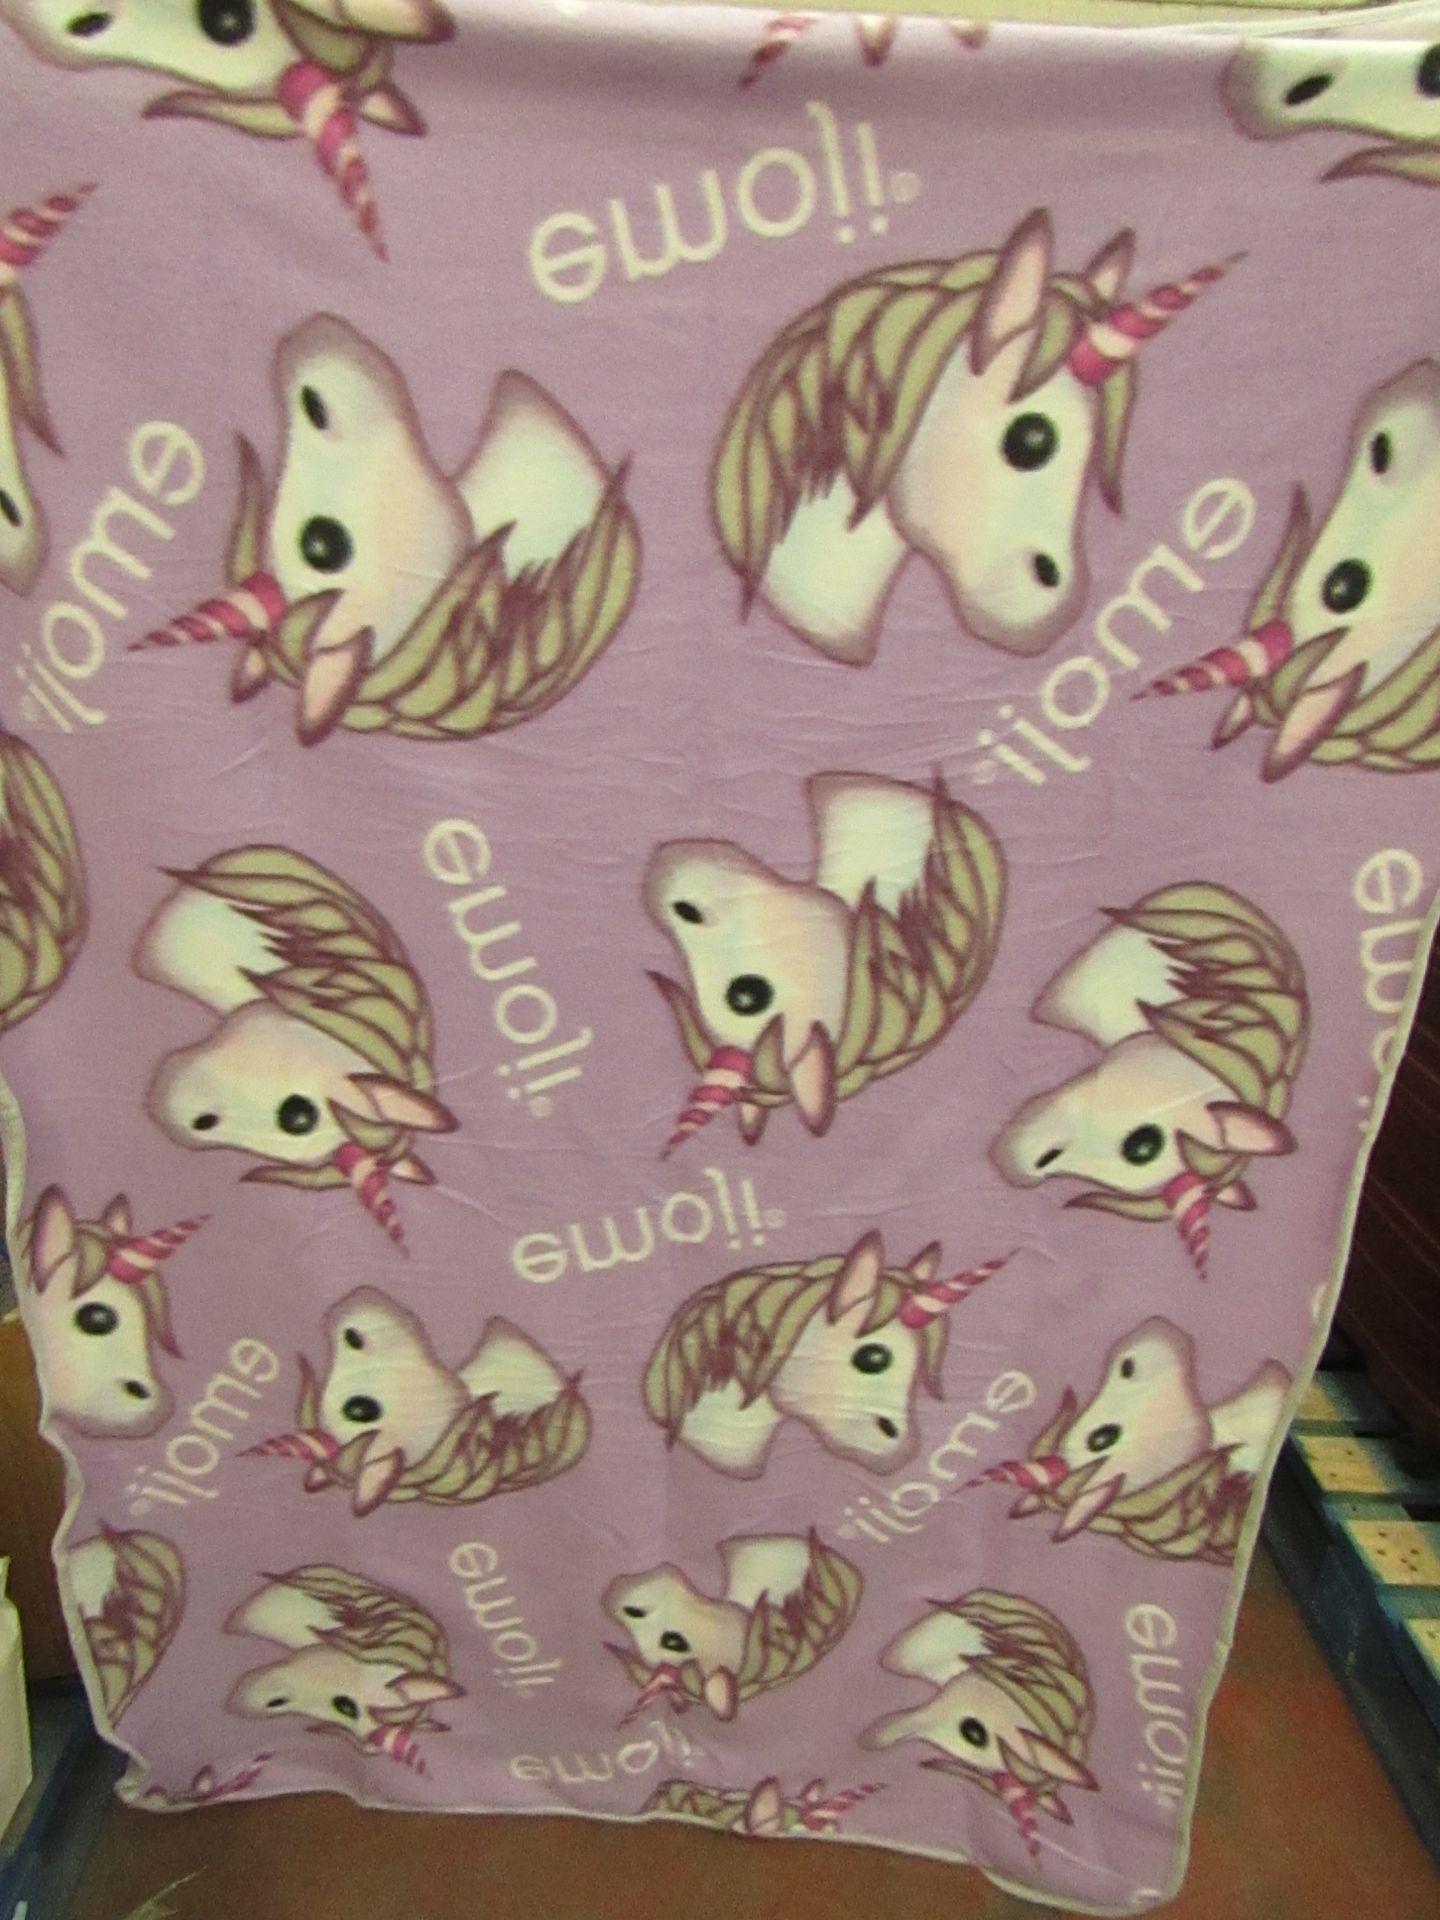 Emoji - Fleece blanket (Unicorn) 100X150cm - Packaged.